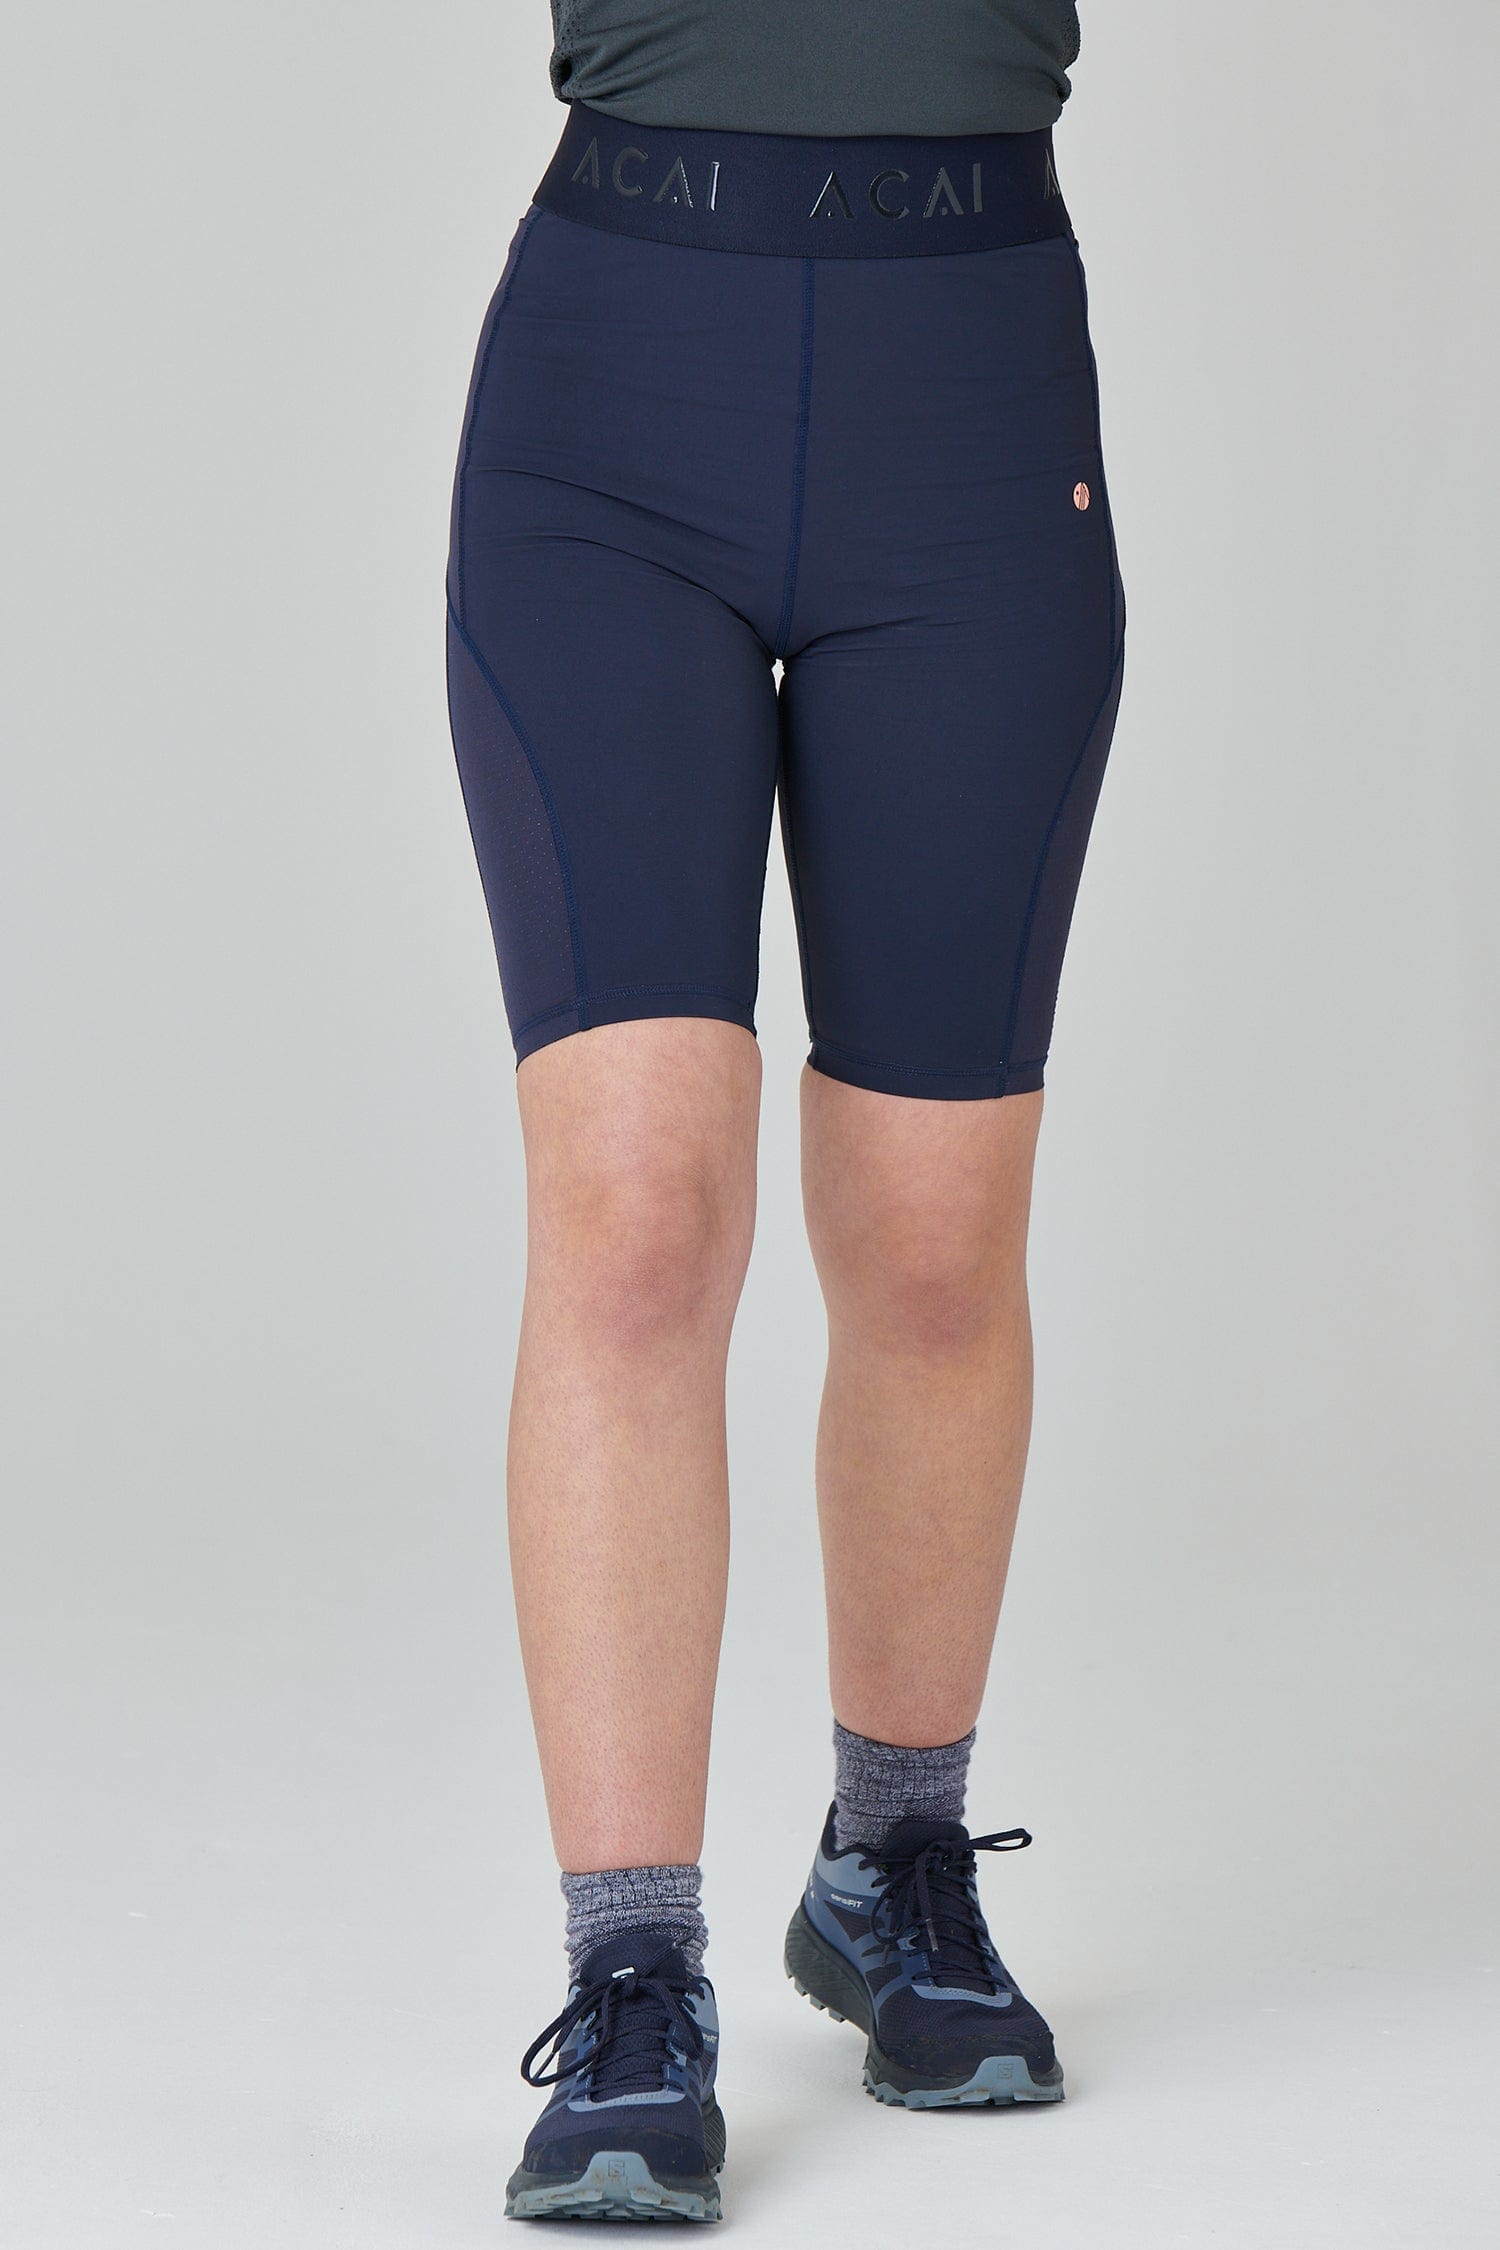 The Panelled Shorts- Midnight Blue - Xlarge / Uk16 - Womens - Acai Outdoorwear